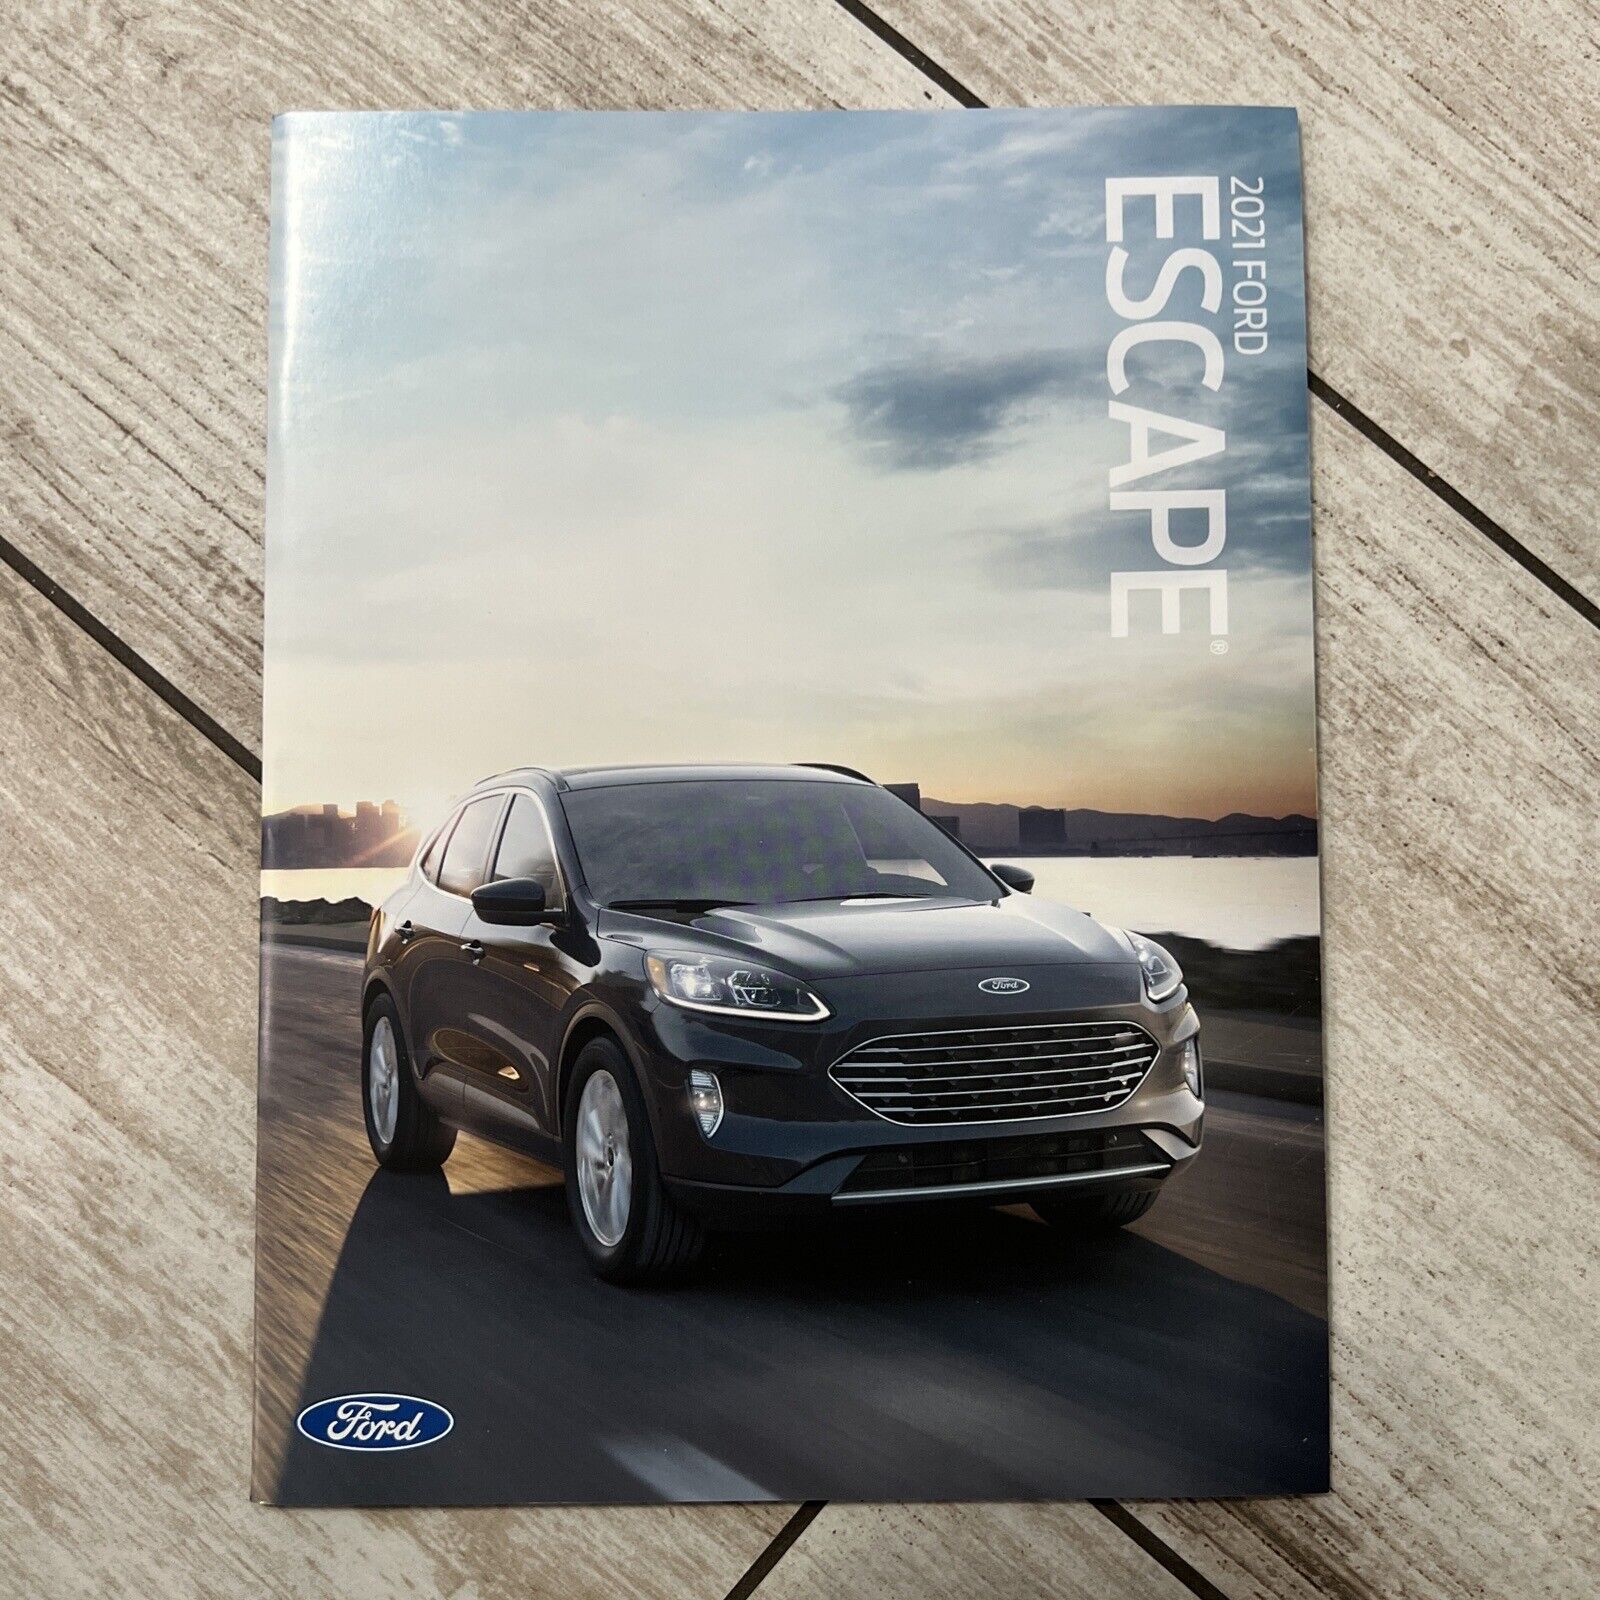 2021 Ford Escape Dealership Sales Brochure New